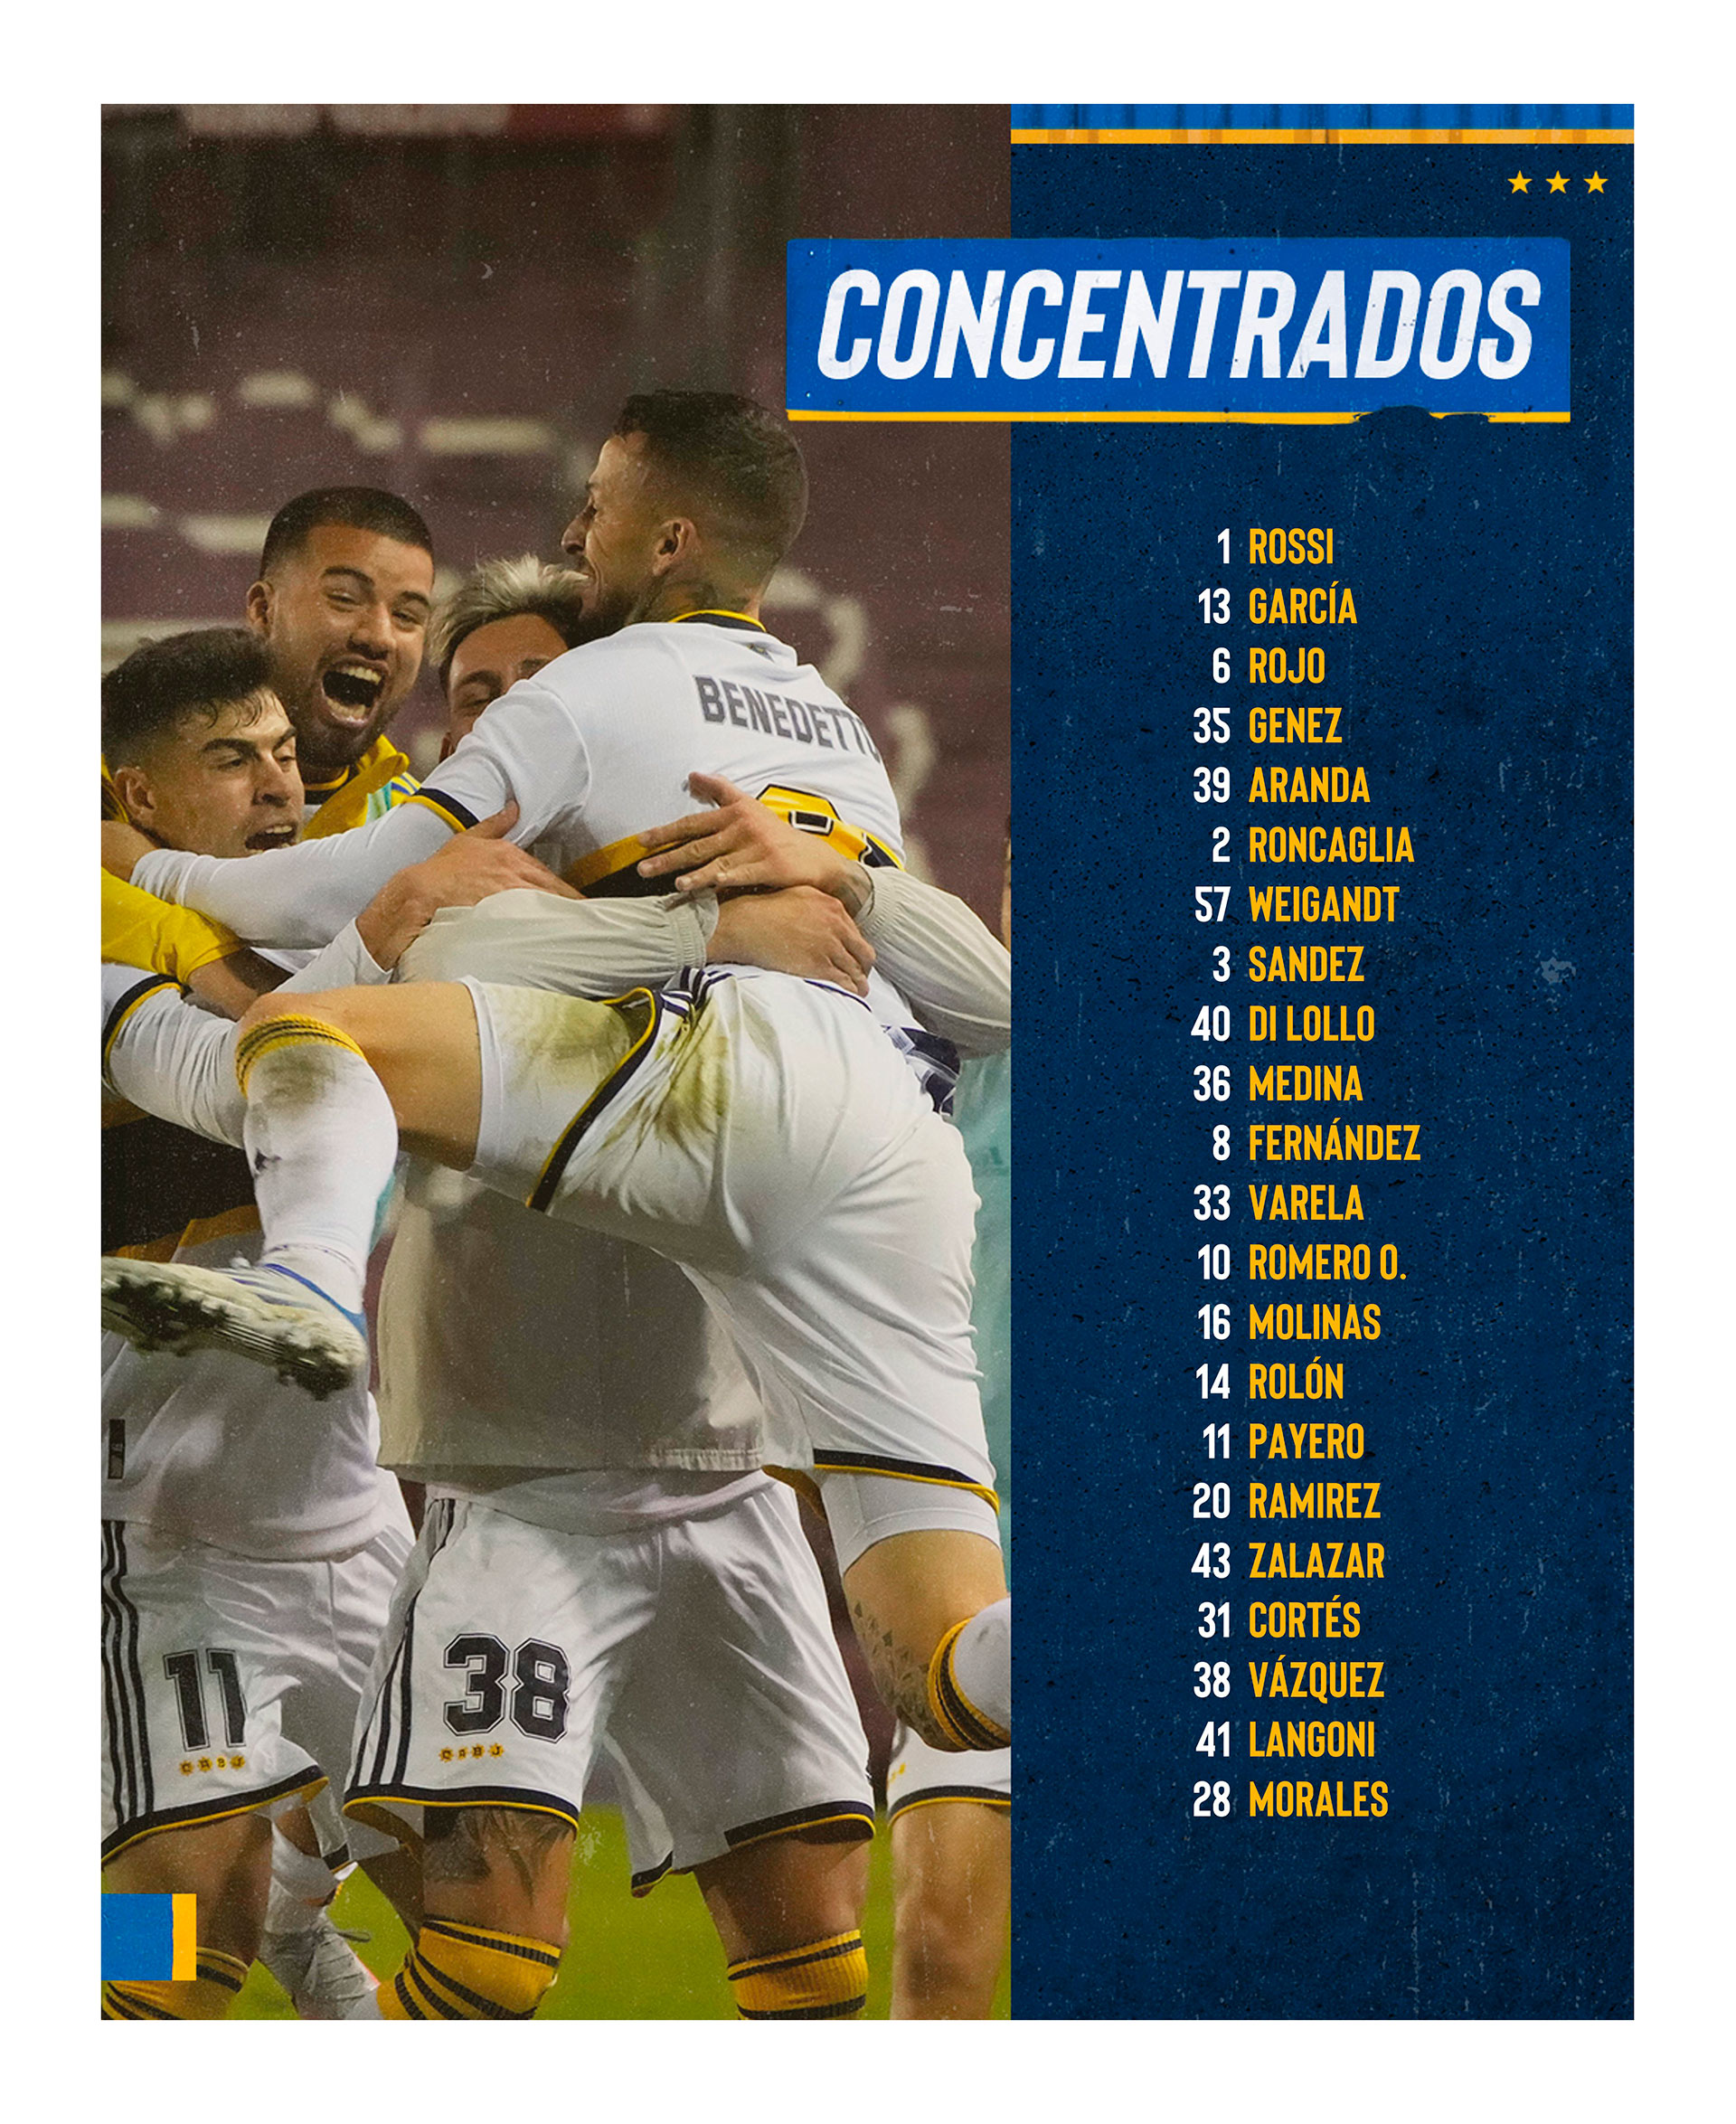 The Summons List Ibarra Gave (Twitter/Boca Juniors)